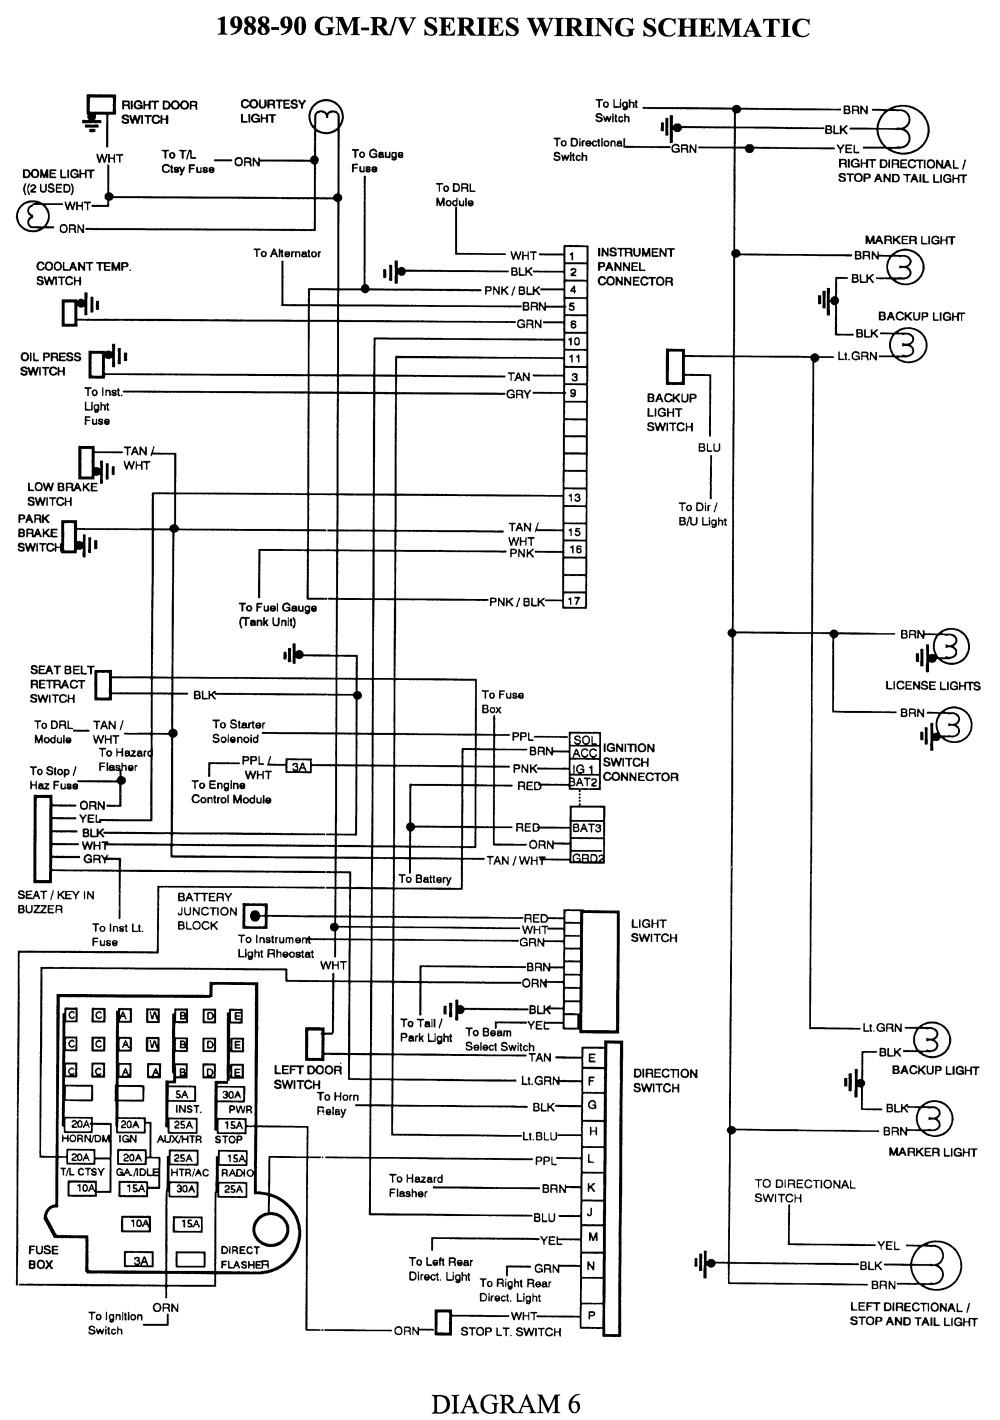 Repair Guides Wiring Diagrams Wiring Diagrams Autozone GMC Suspension Diagram 1989 Gmc Starter Wiring Diagram Schematic